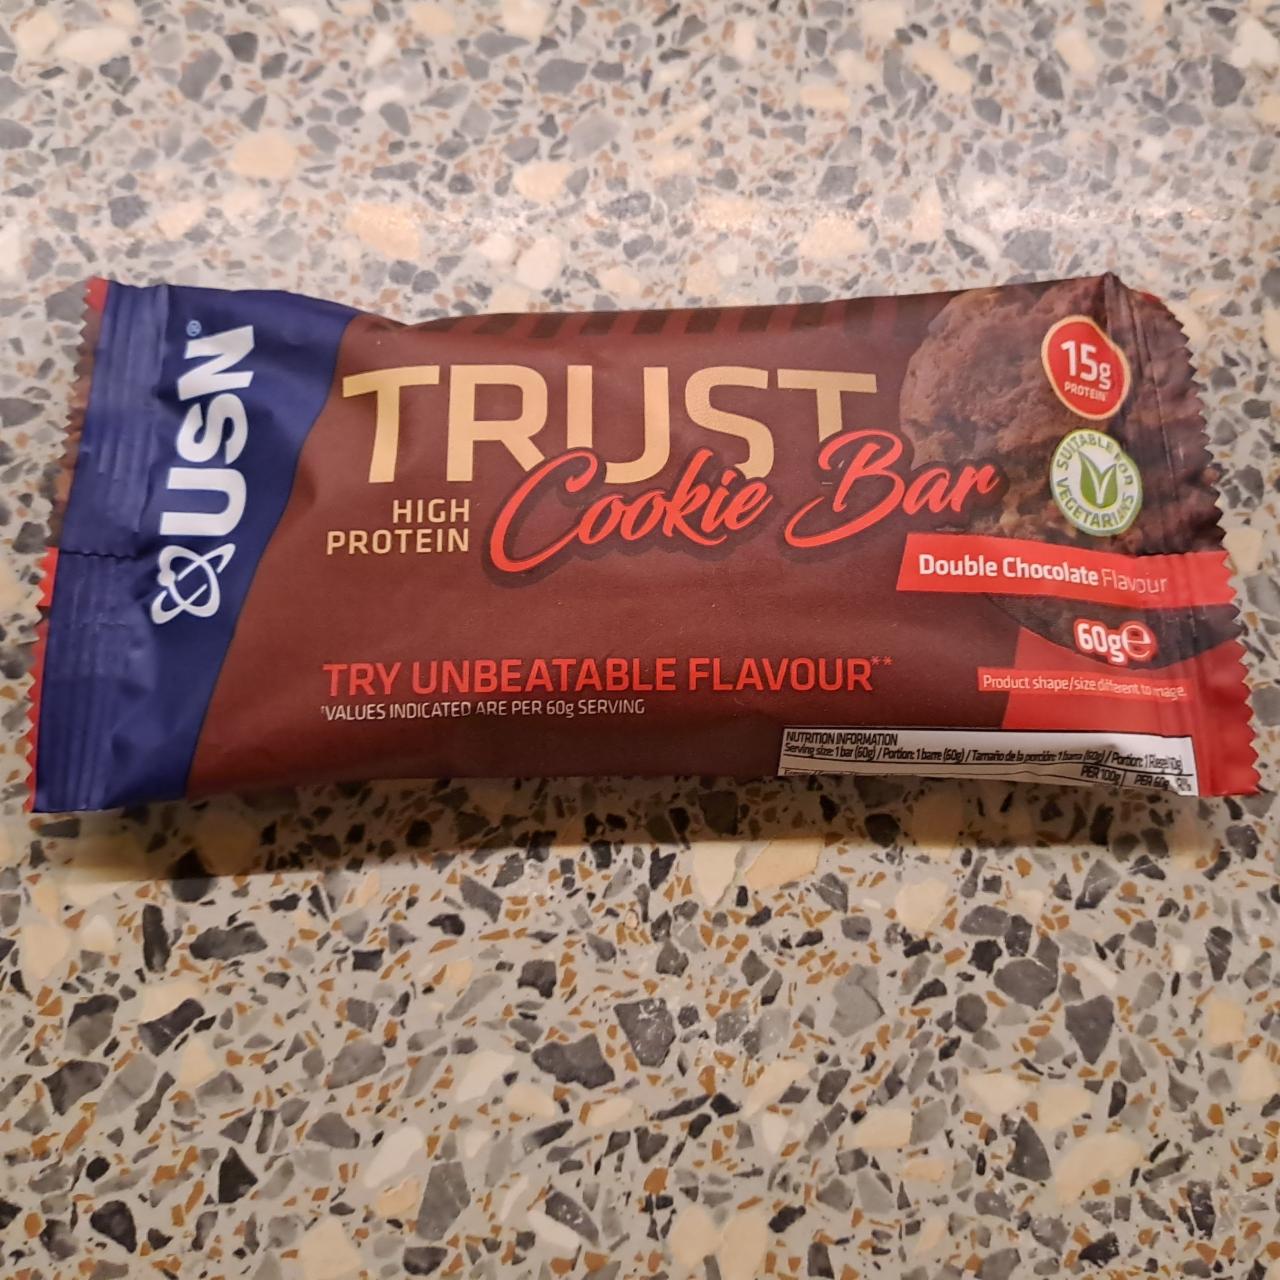 Fotografie - USN Trust Cookie Bar Double Chocolate Flavour